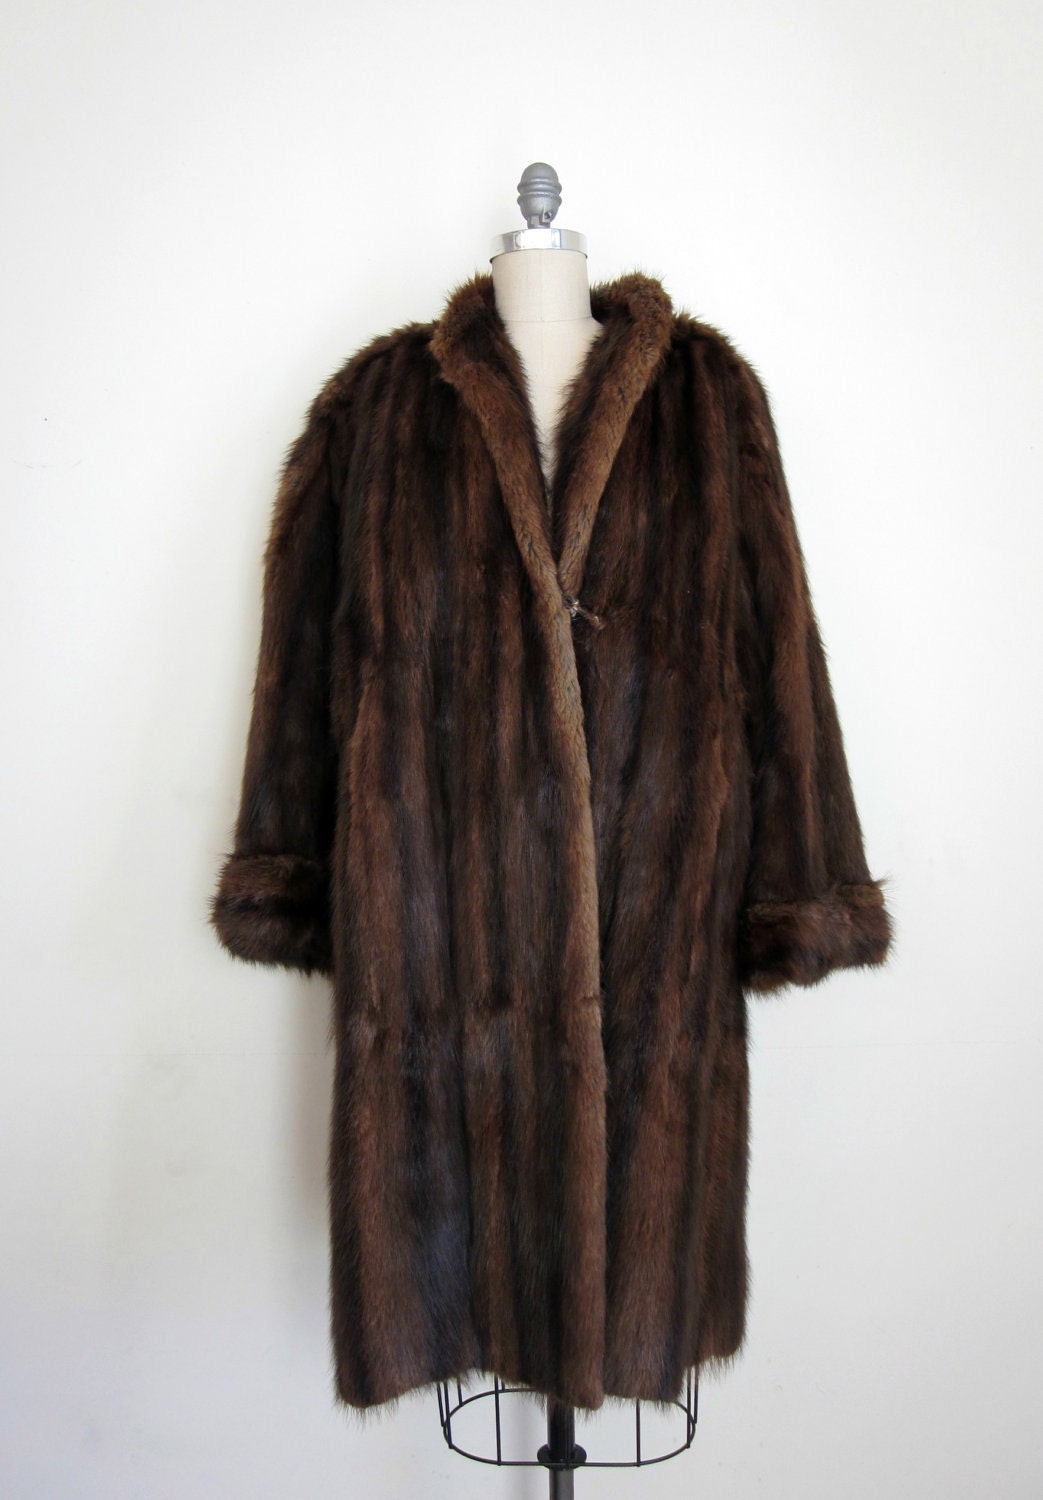 40's kakas furs mink coat long from edward kakas and sons 93 newburry street boston women's